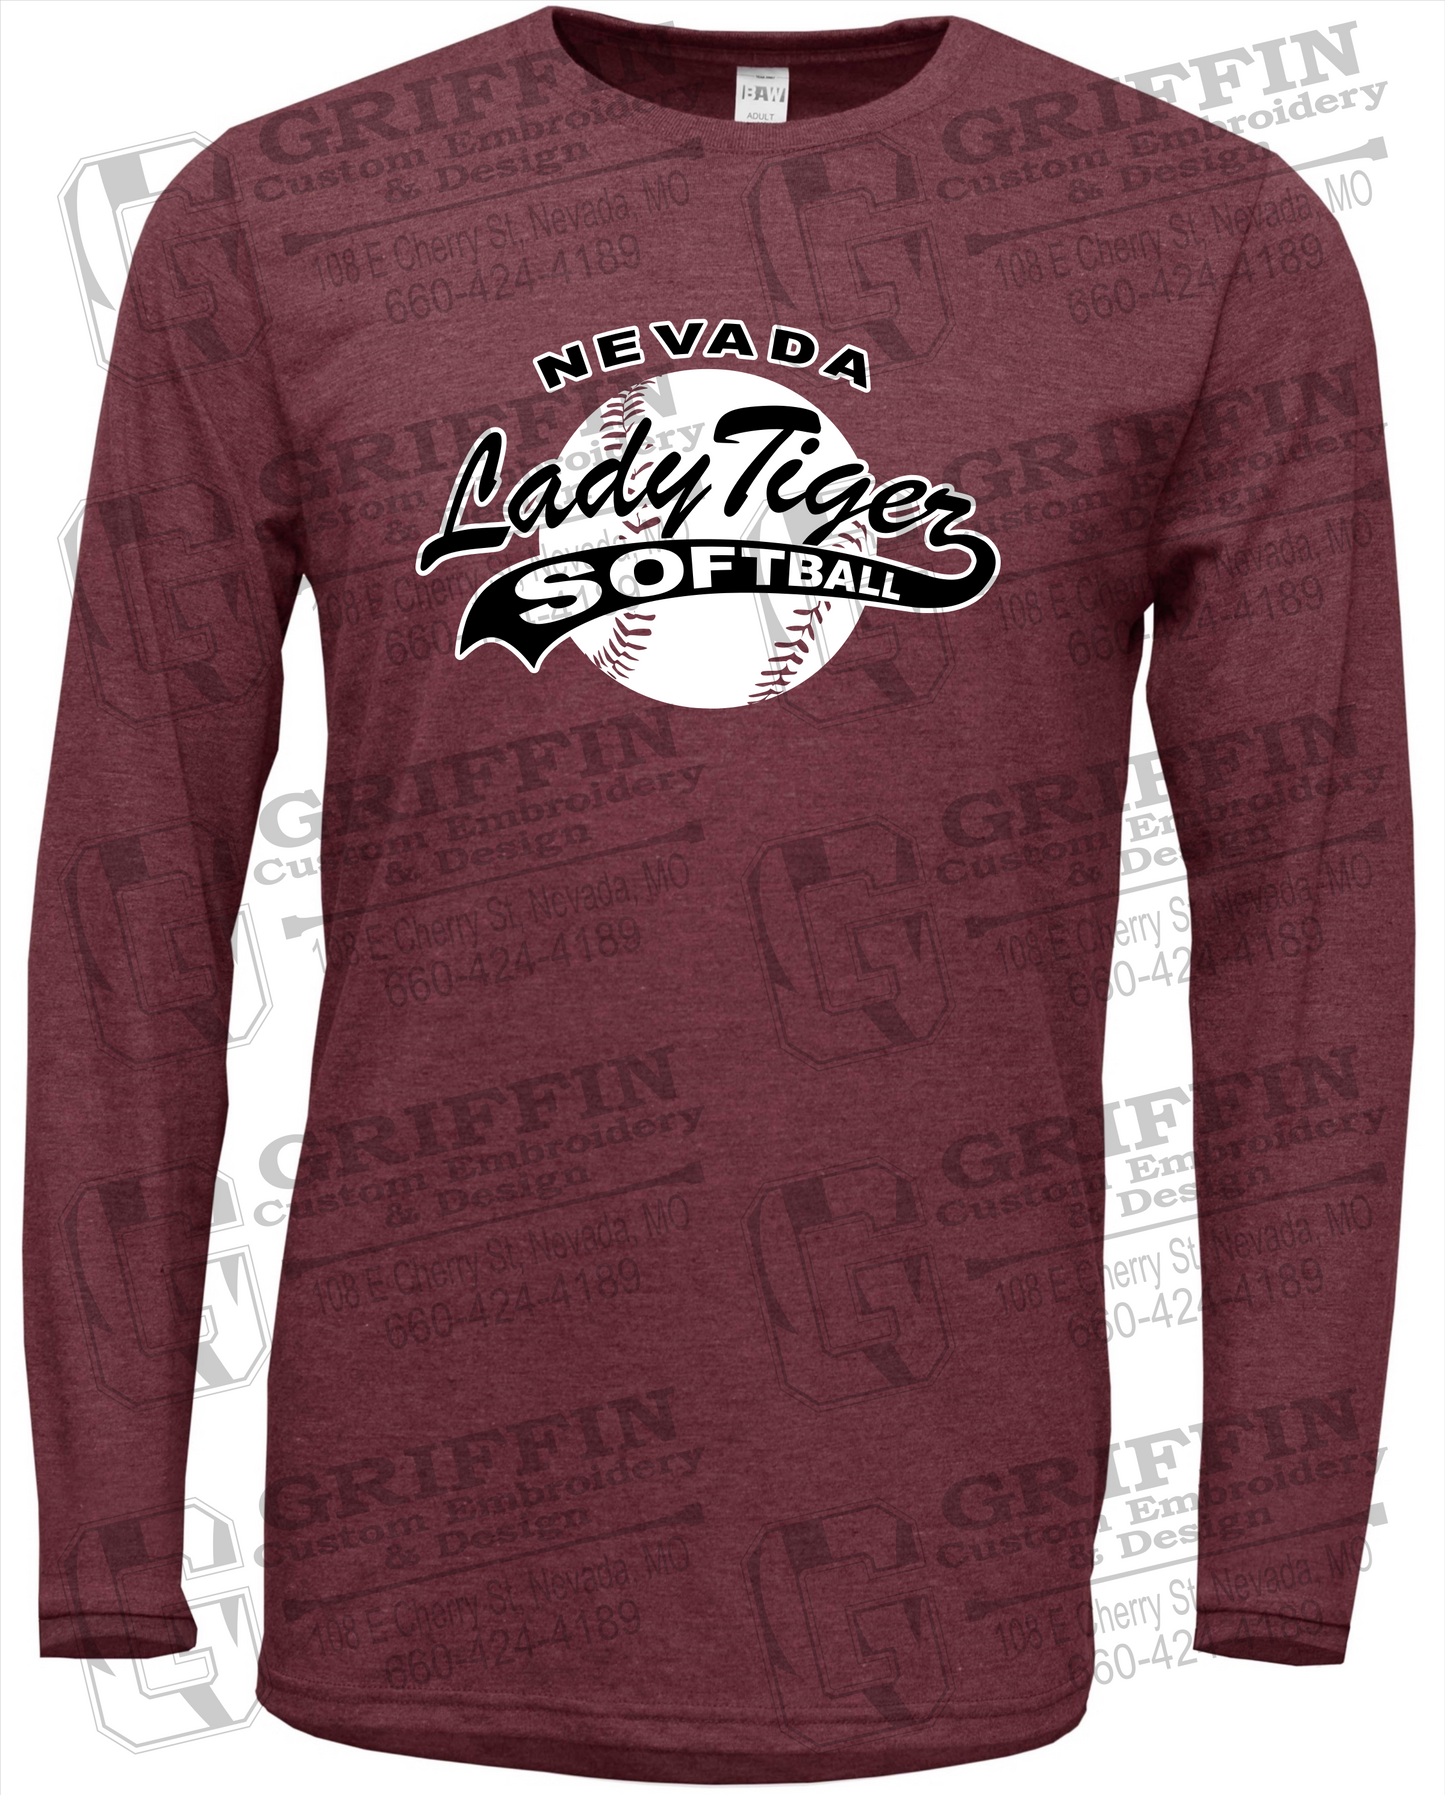 Soft-Tek Long Sleeve T-Shirt - Softball - Nevada Tigers 21-X